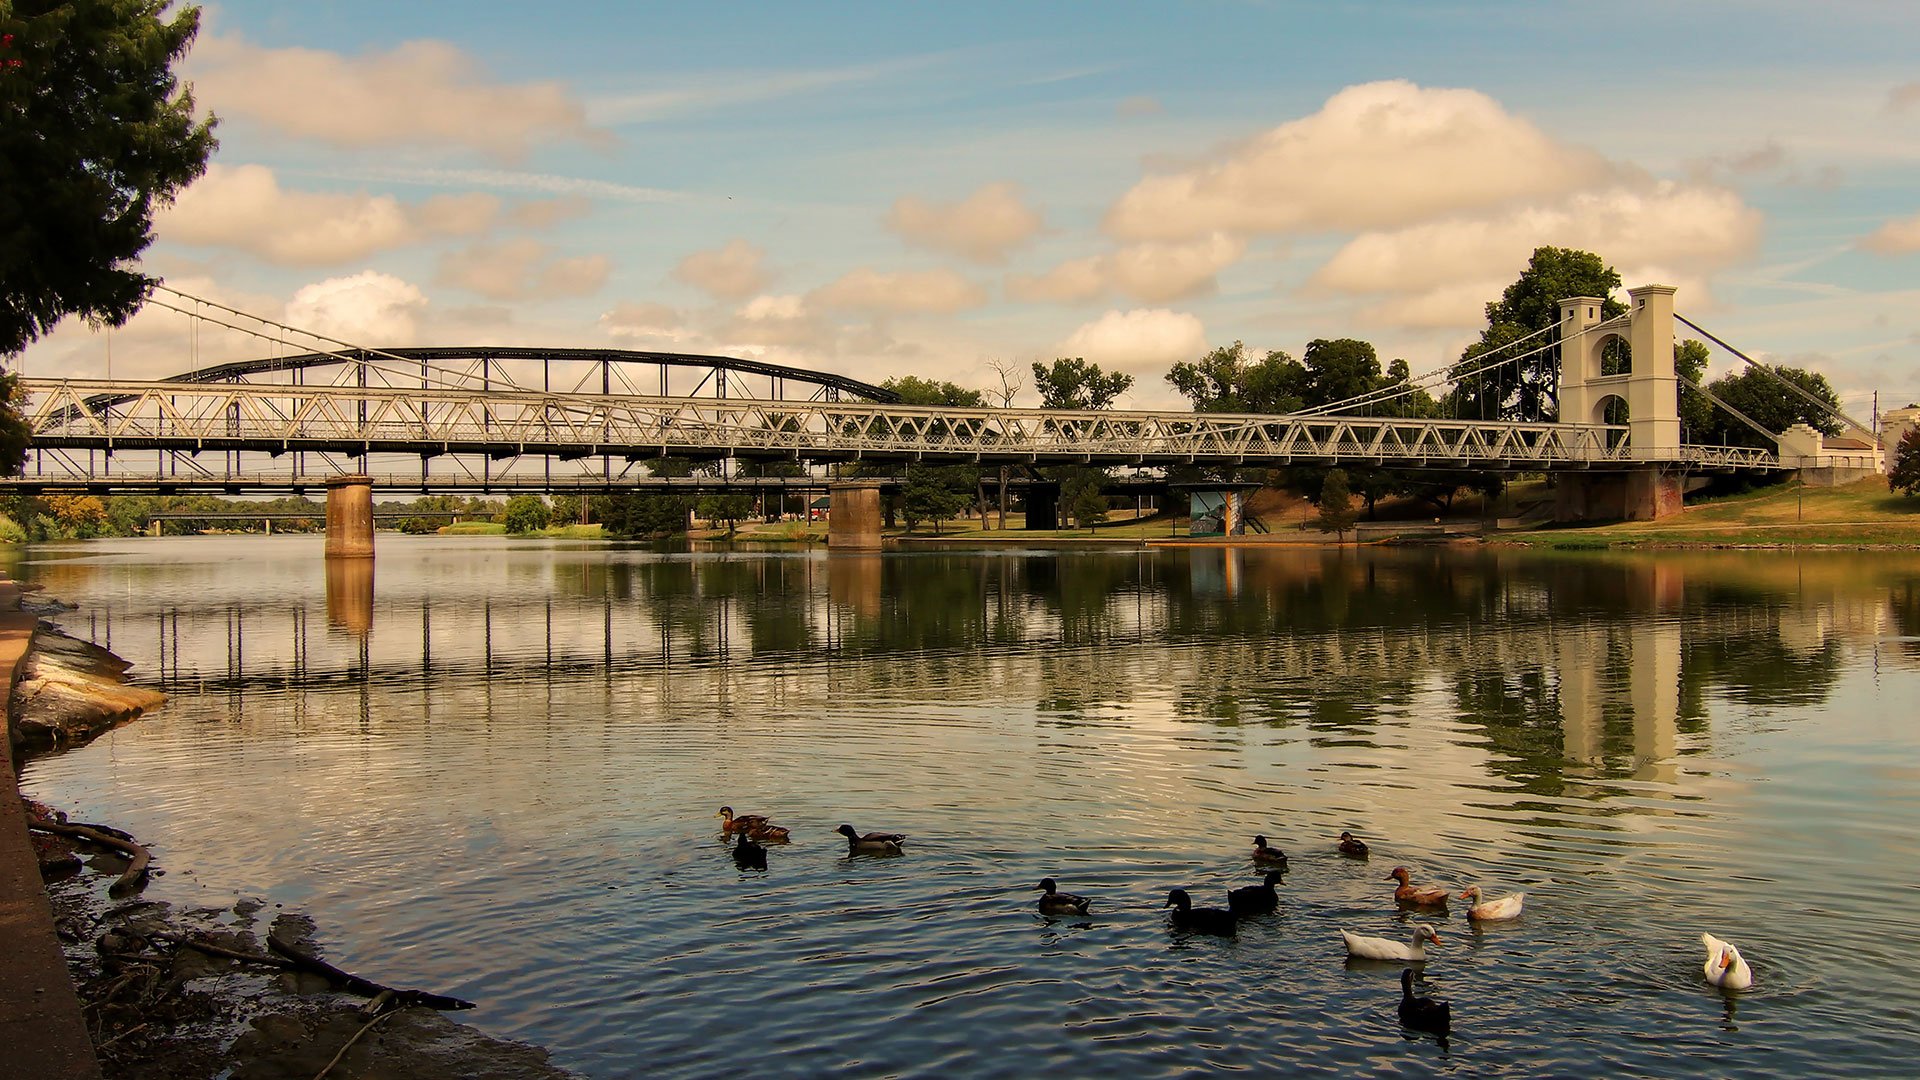 Waco, TX bridge with ducks